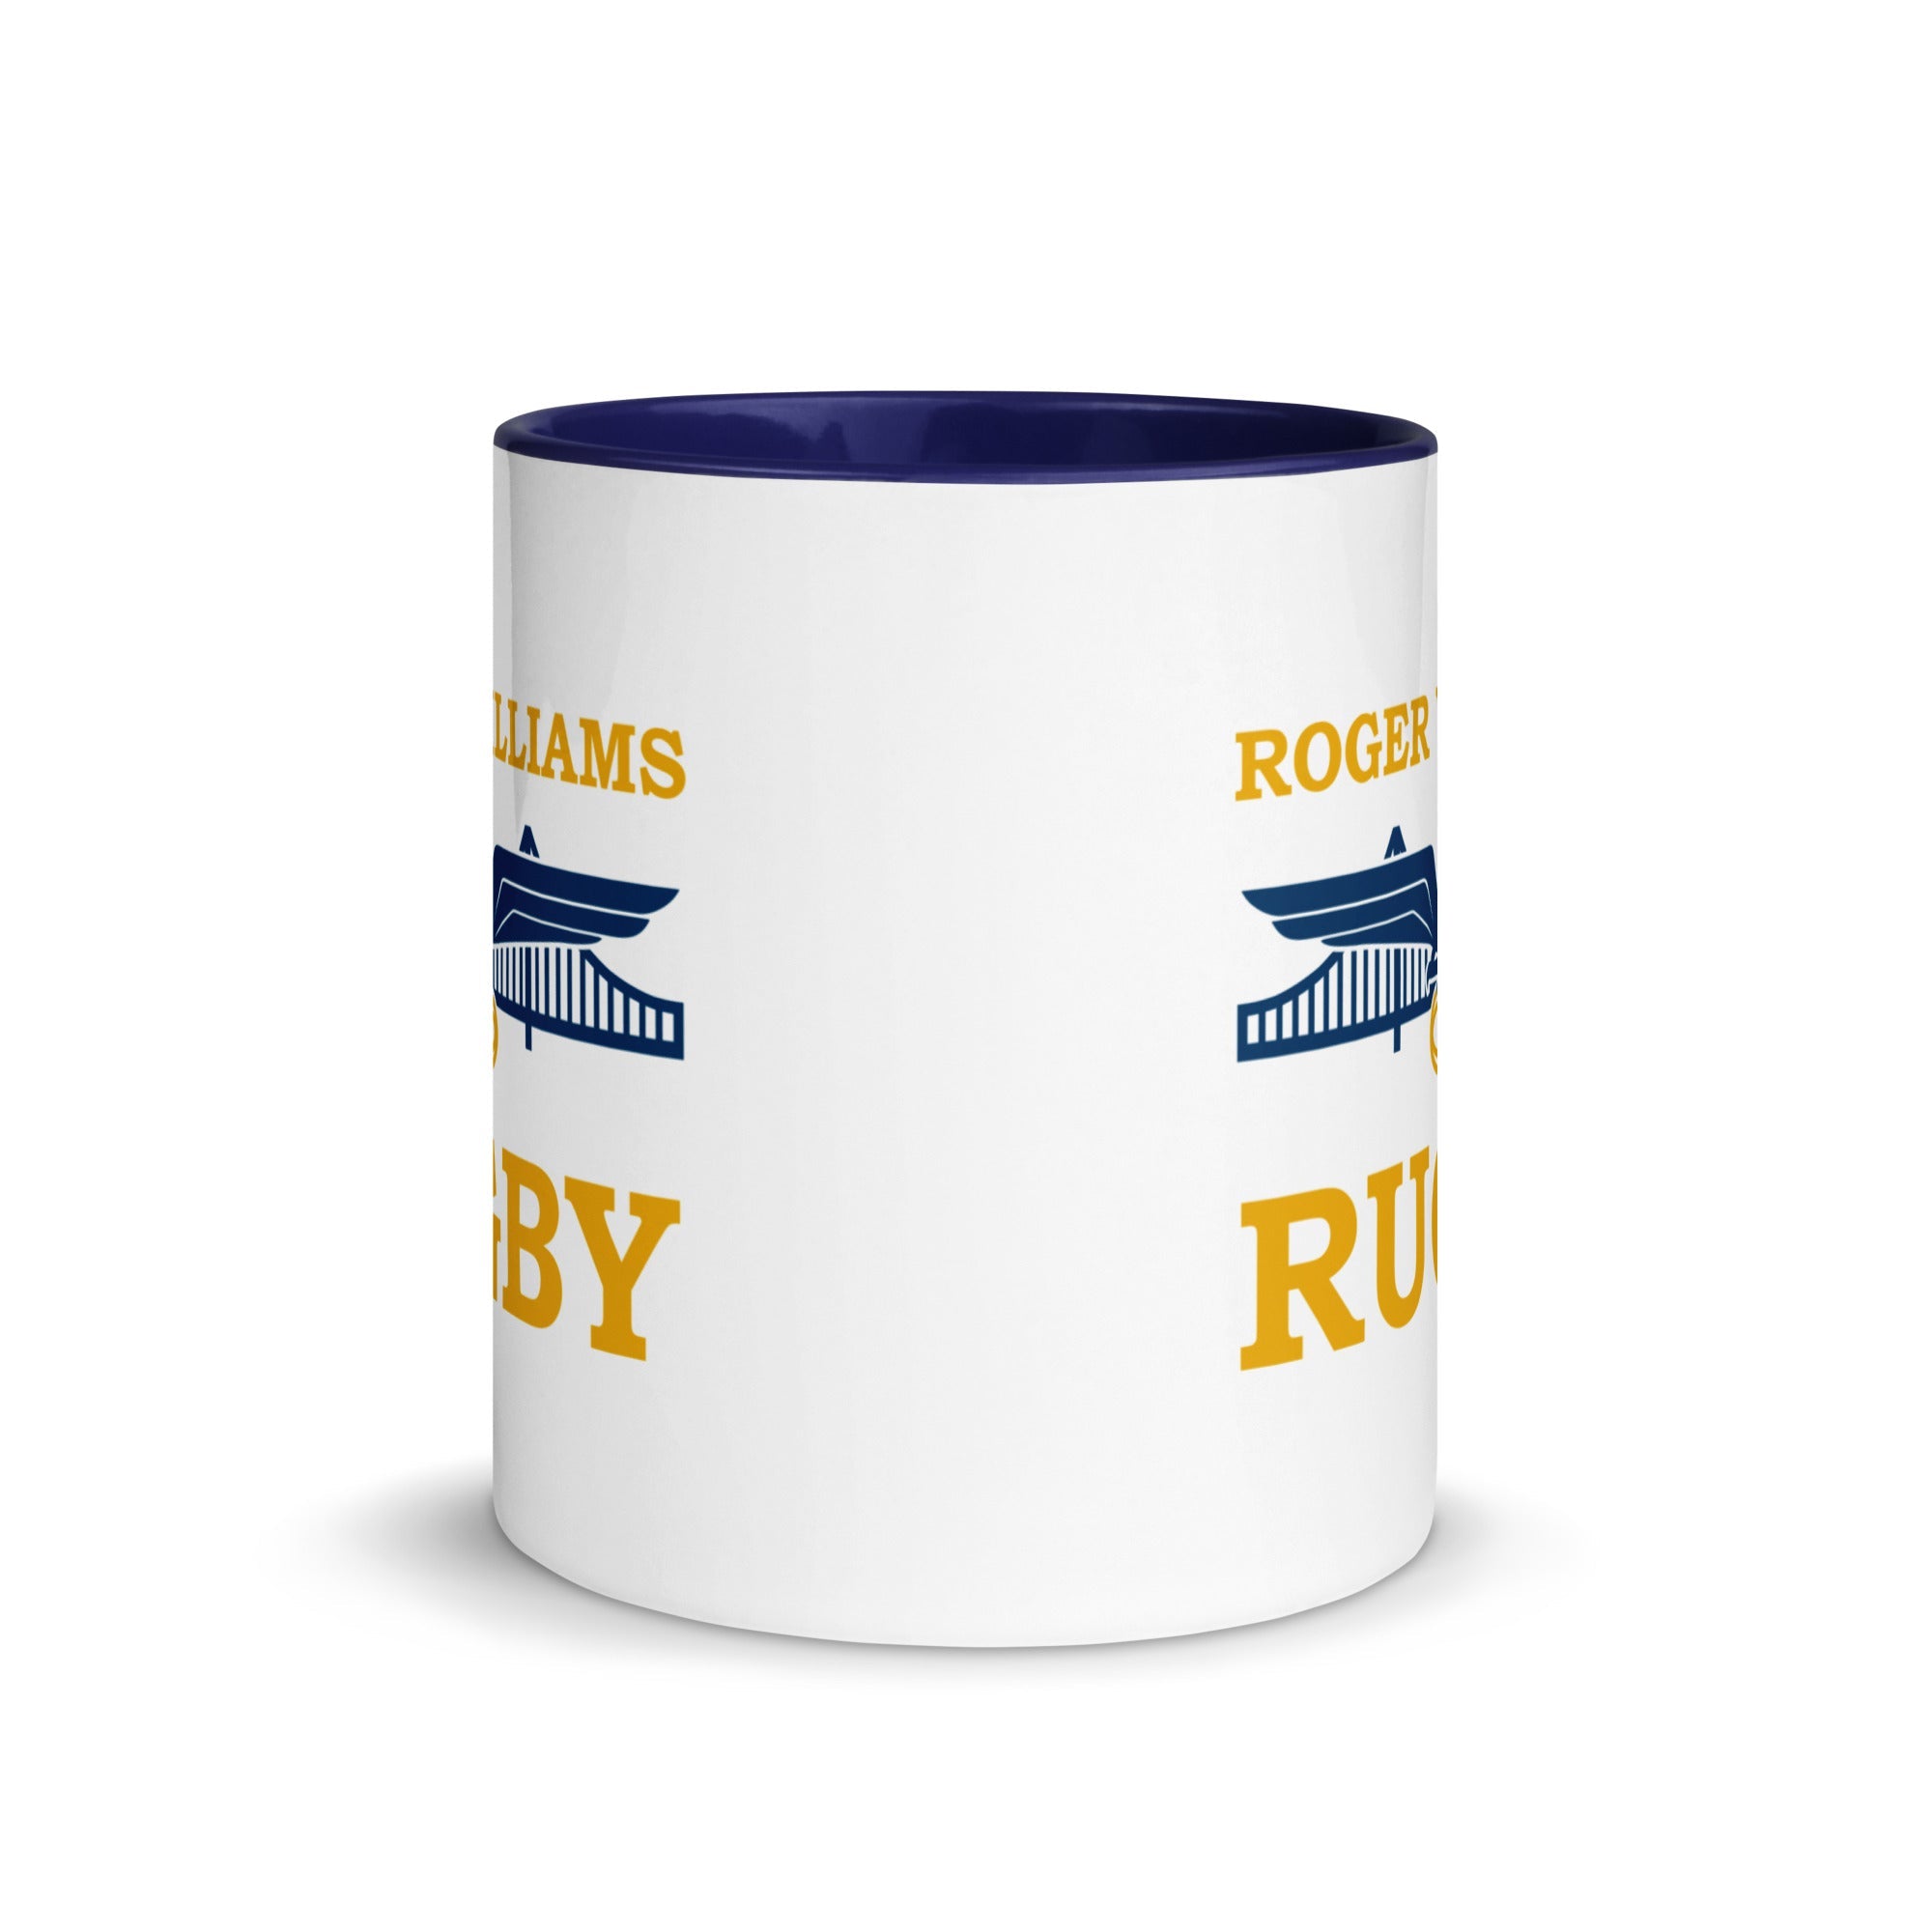 Rugby Imports Roger Williams RFC Coffe Mug